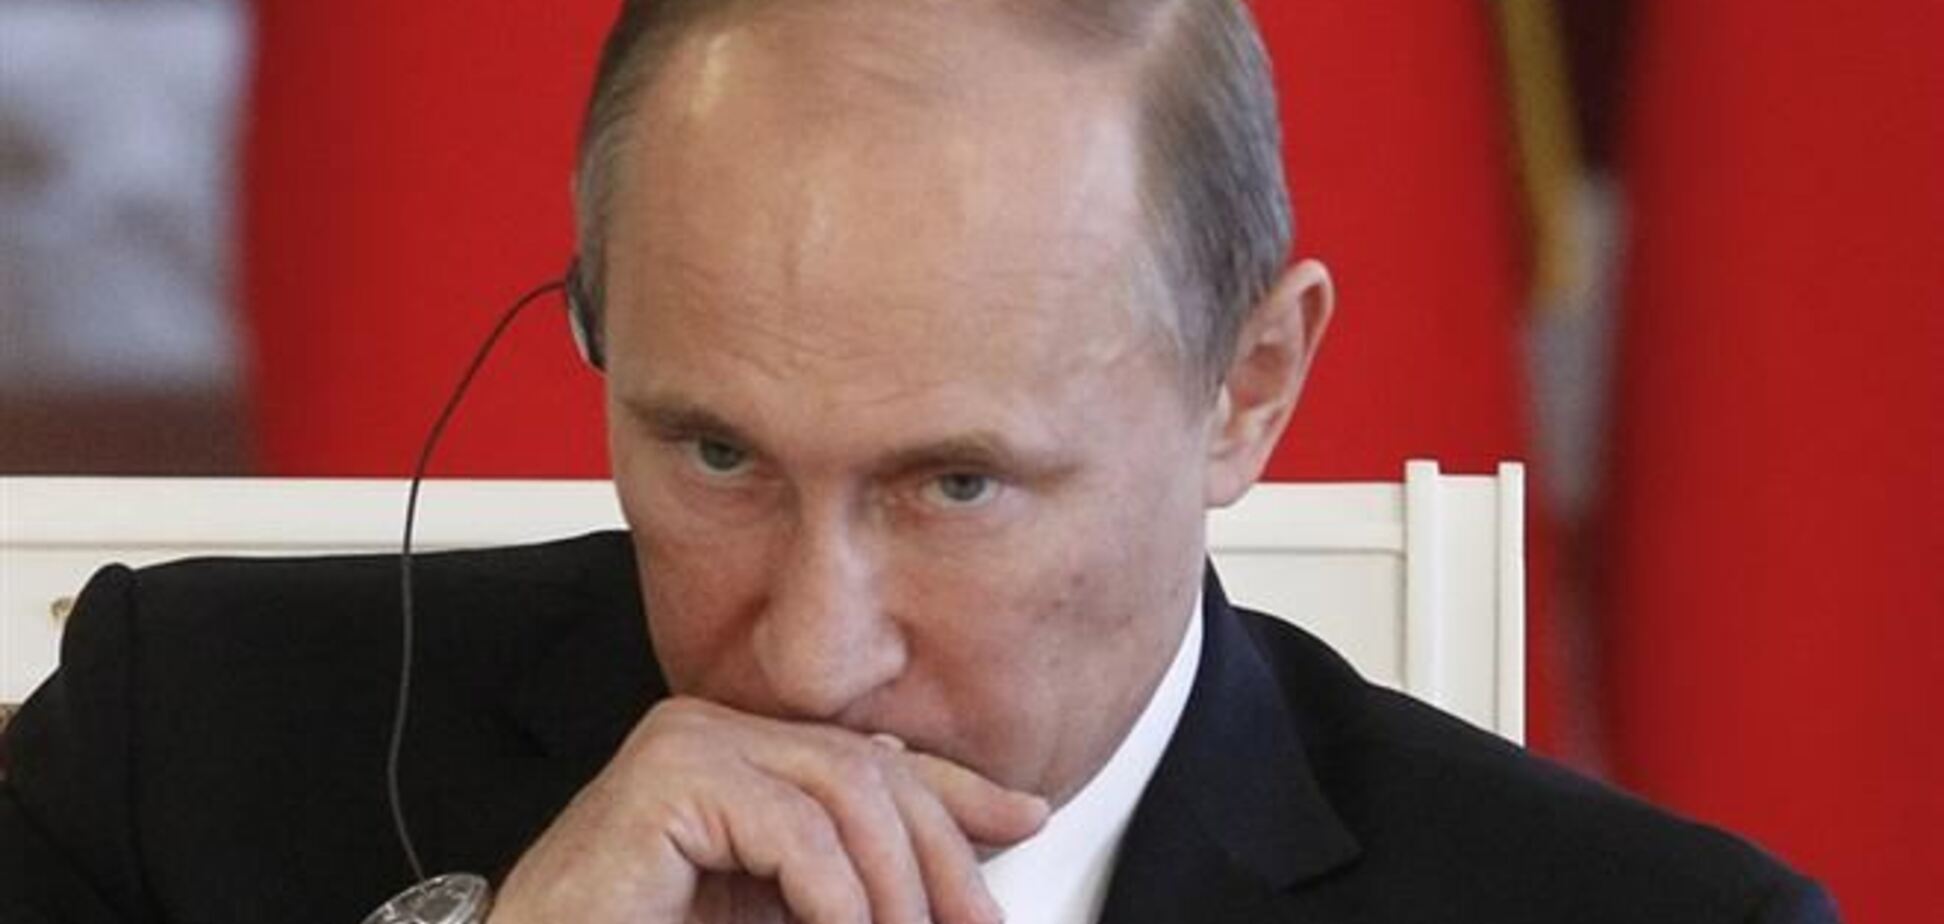   Путин разрешил акции протеста во время Олимпиады в Сочи